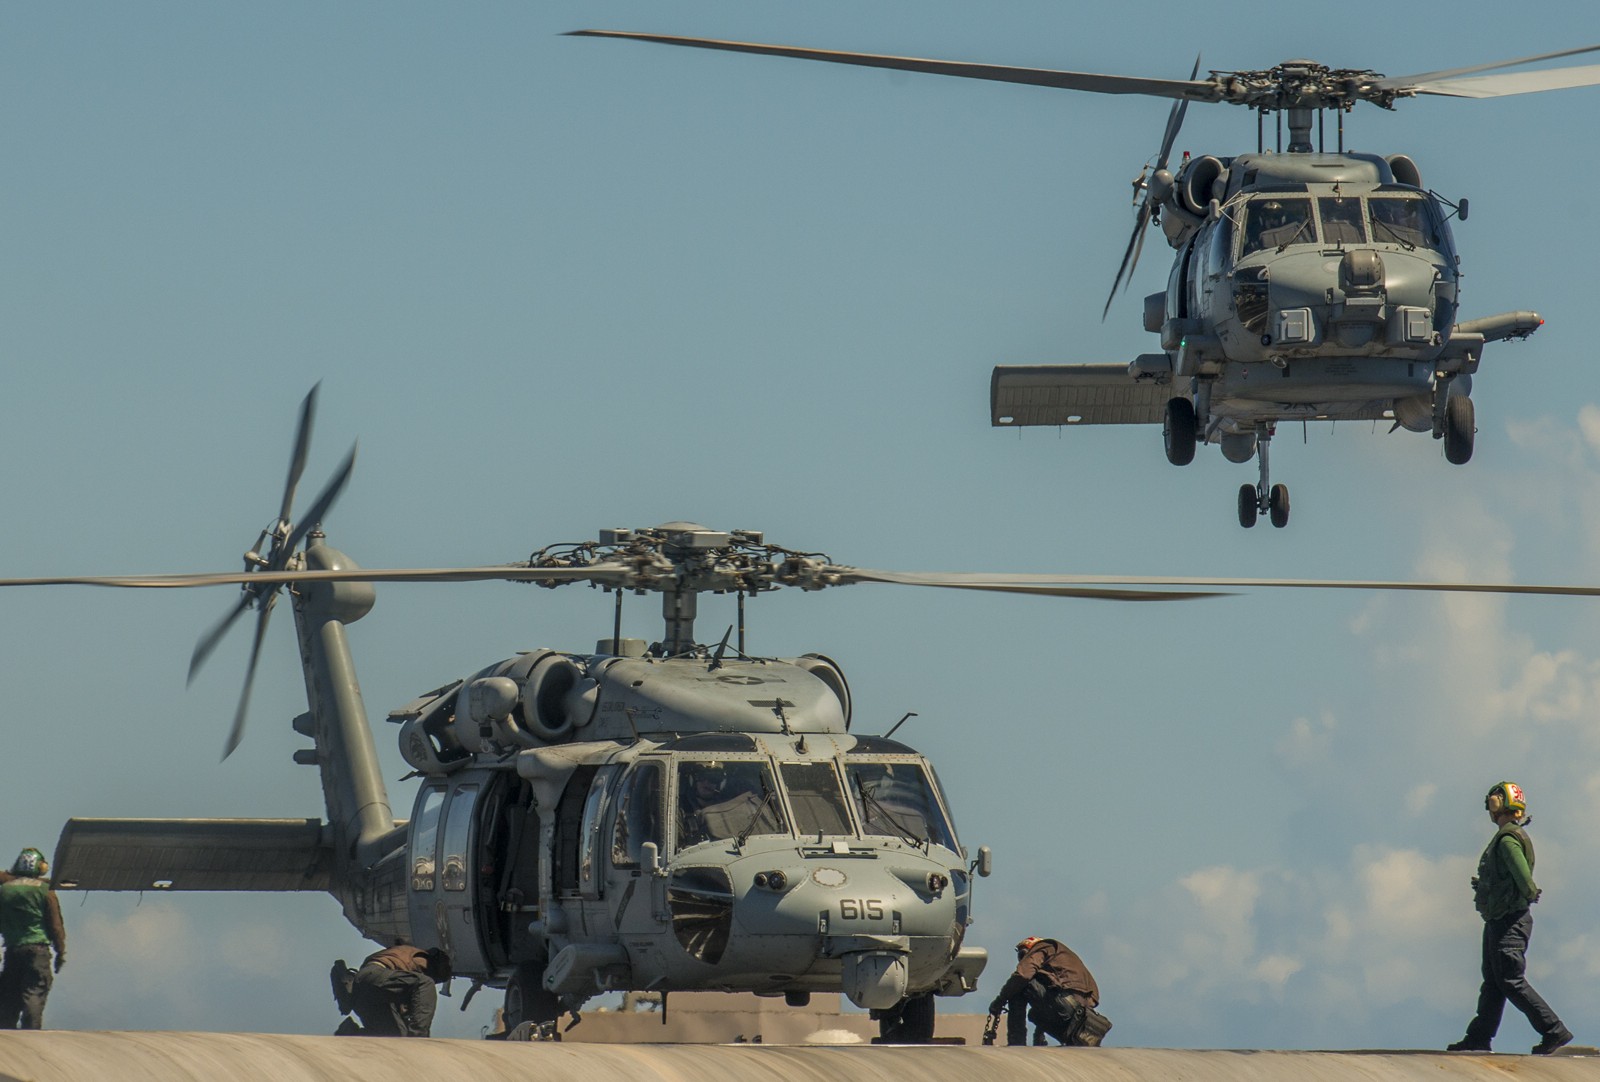 hsc-15 red lions helicopter sea combat squadron us navy mh-60s seahawk cvw-17 uss carl vinson cvn-70 93